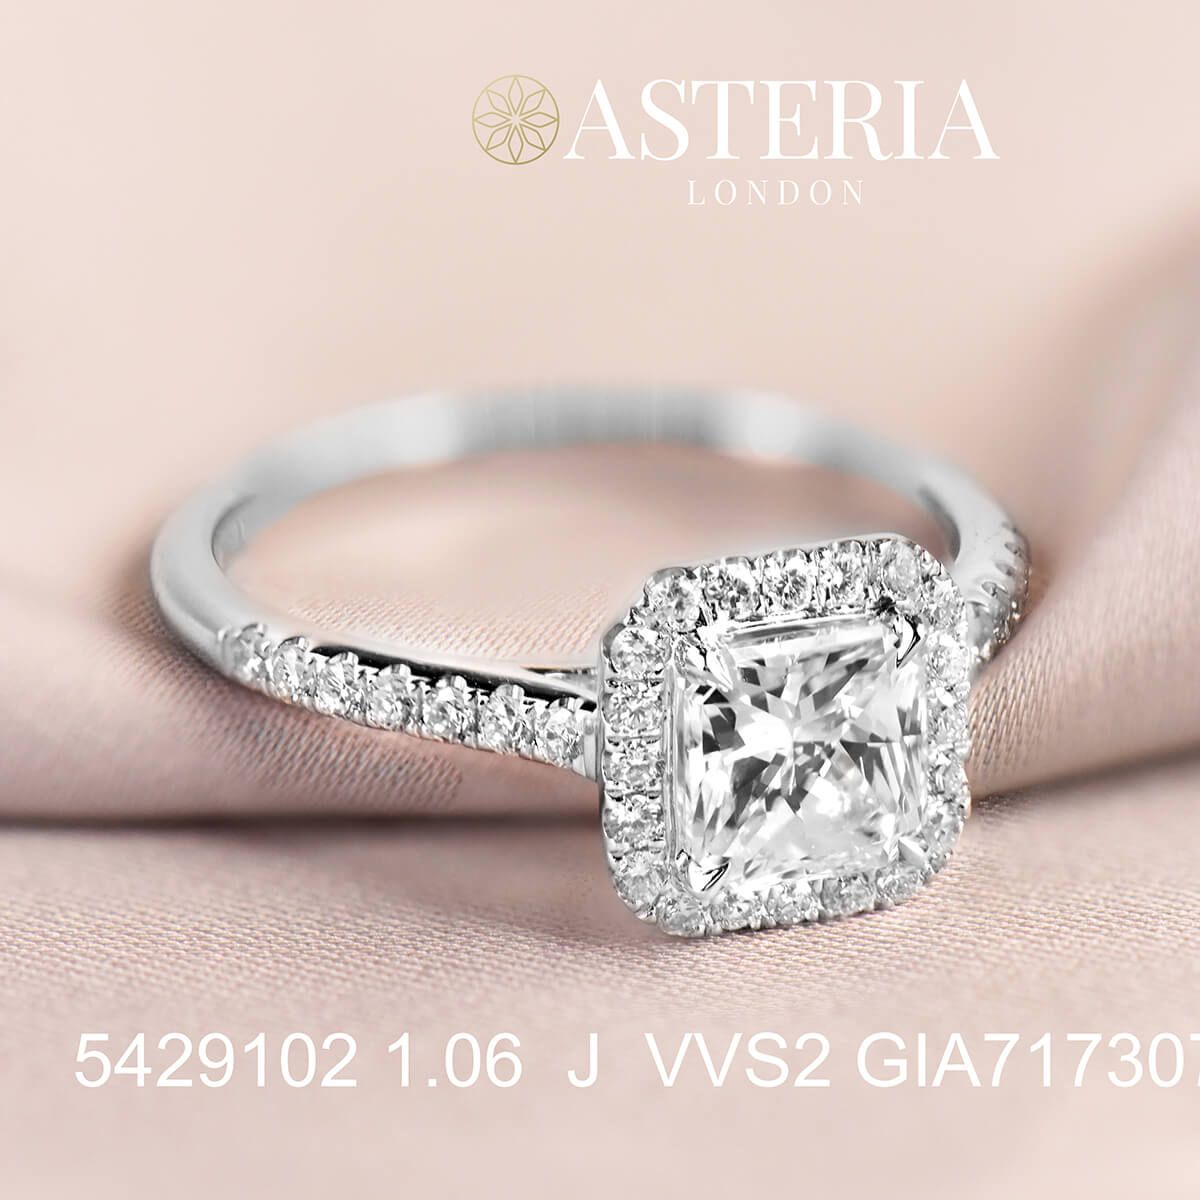  White Diamond Ring, 1.06 Ct. (1.34 Ct. TW), Radiant shape, GIA Certified, 7173077226